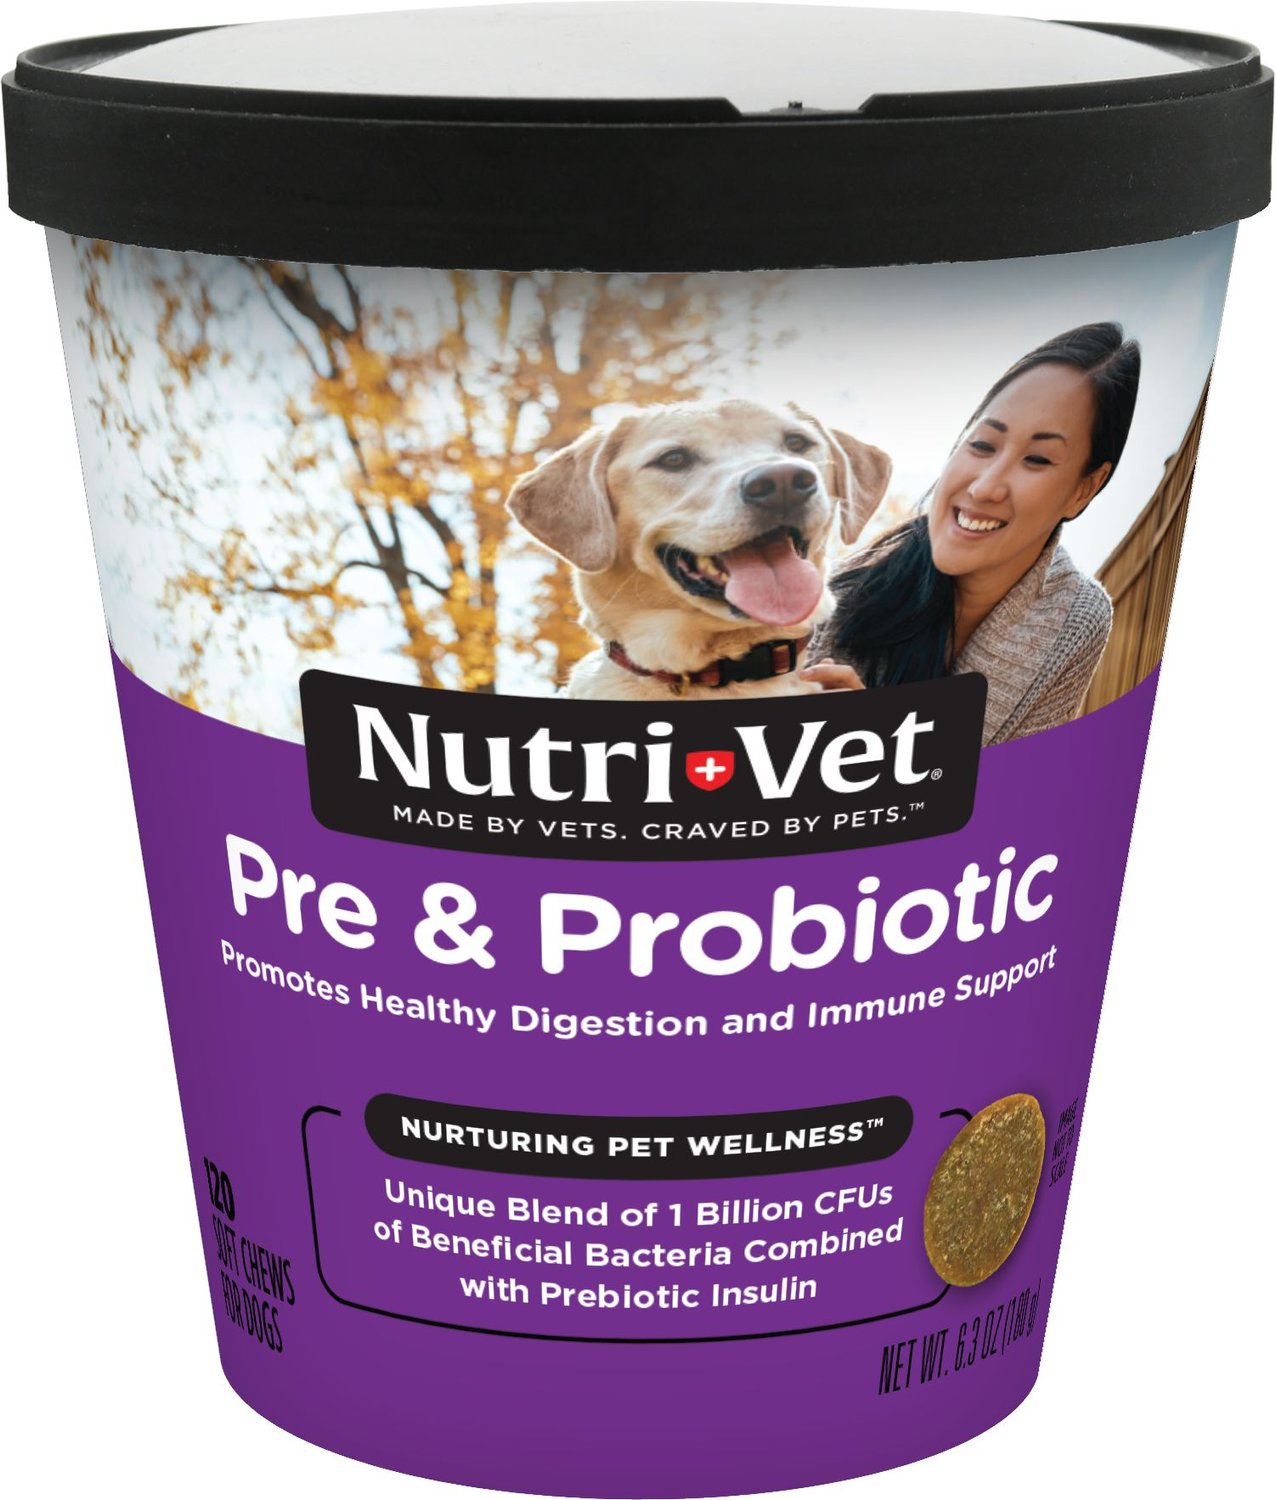 probiotics for dogs